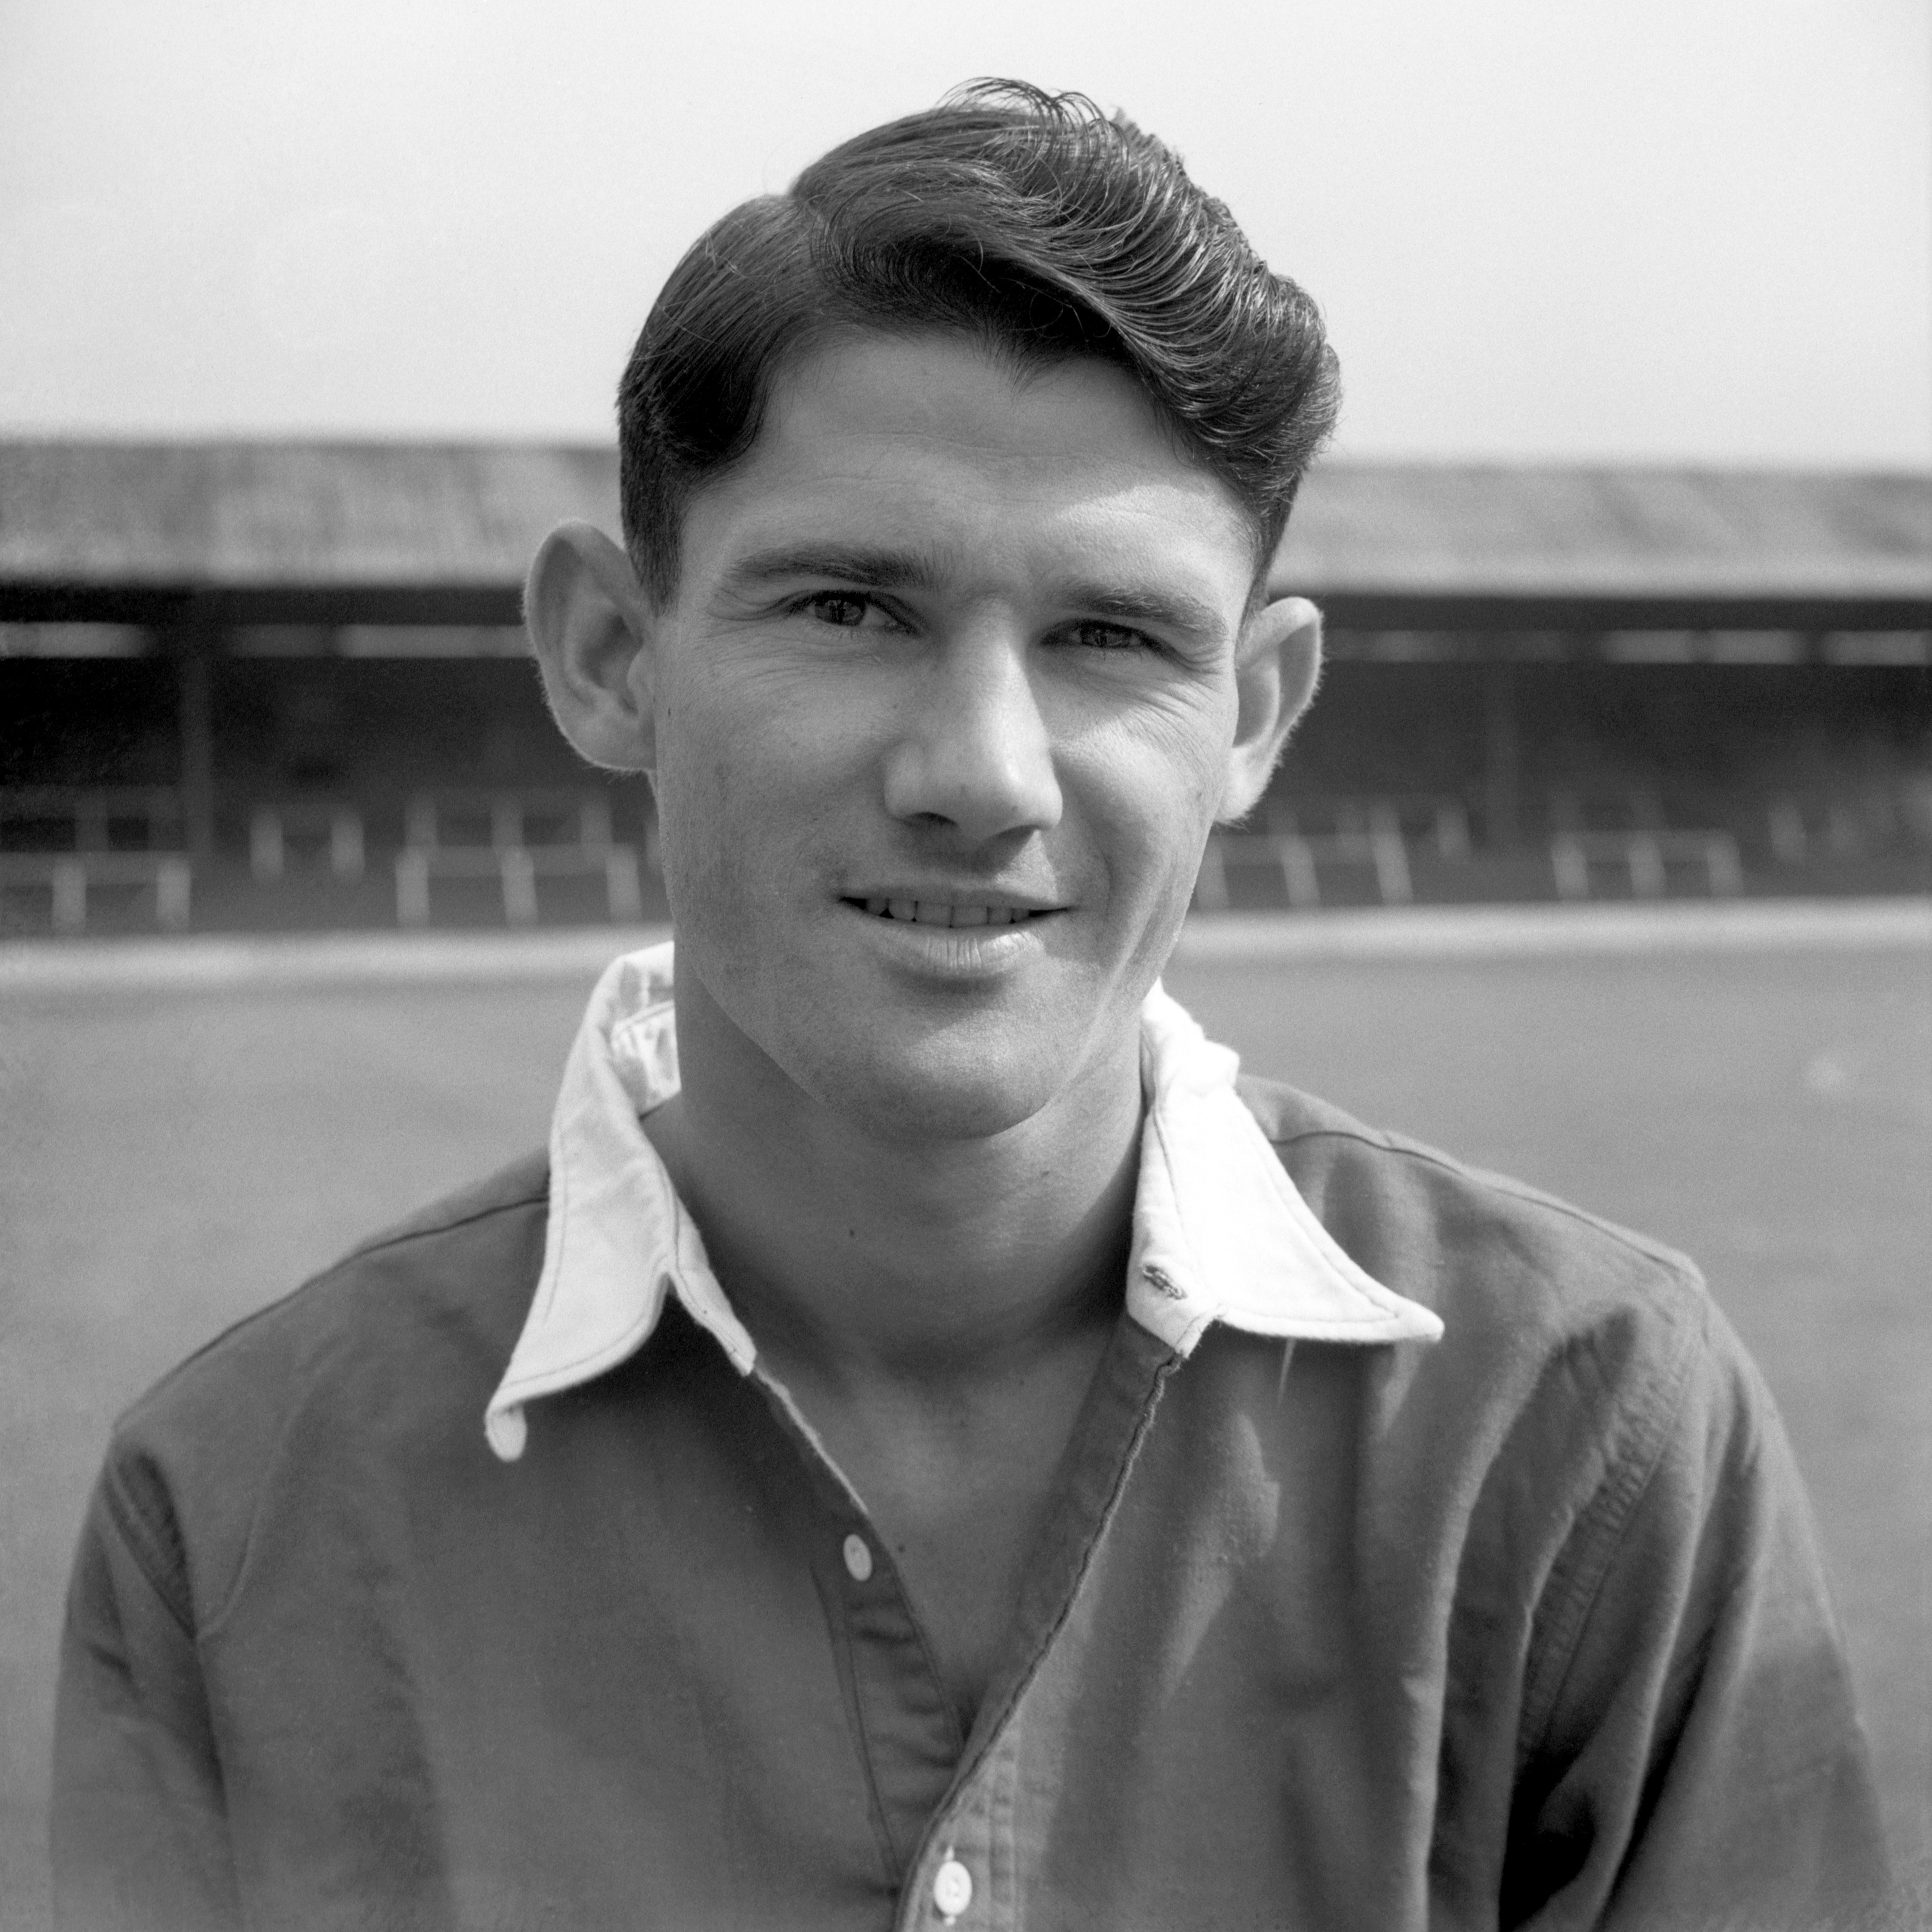 John Hewie made his Charlton debut in 1951